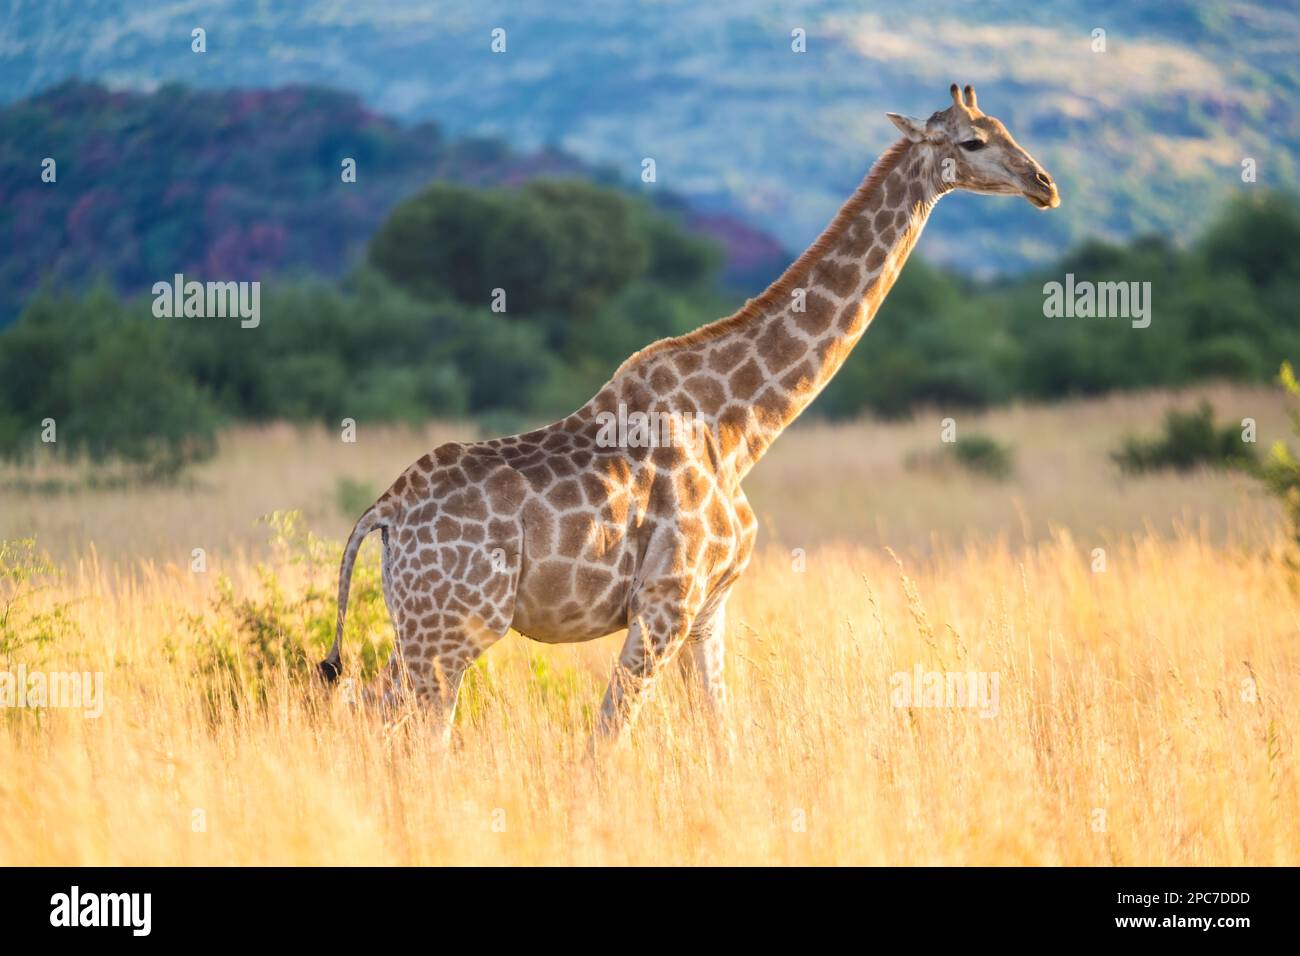 Giraffe, Parco Nazionale di Pilanesburg, nr Johannesburg, Sudafrica Foto Stock